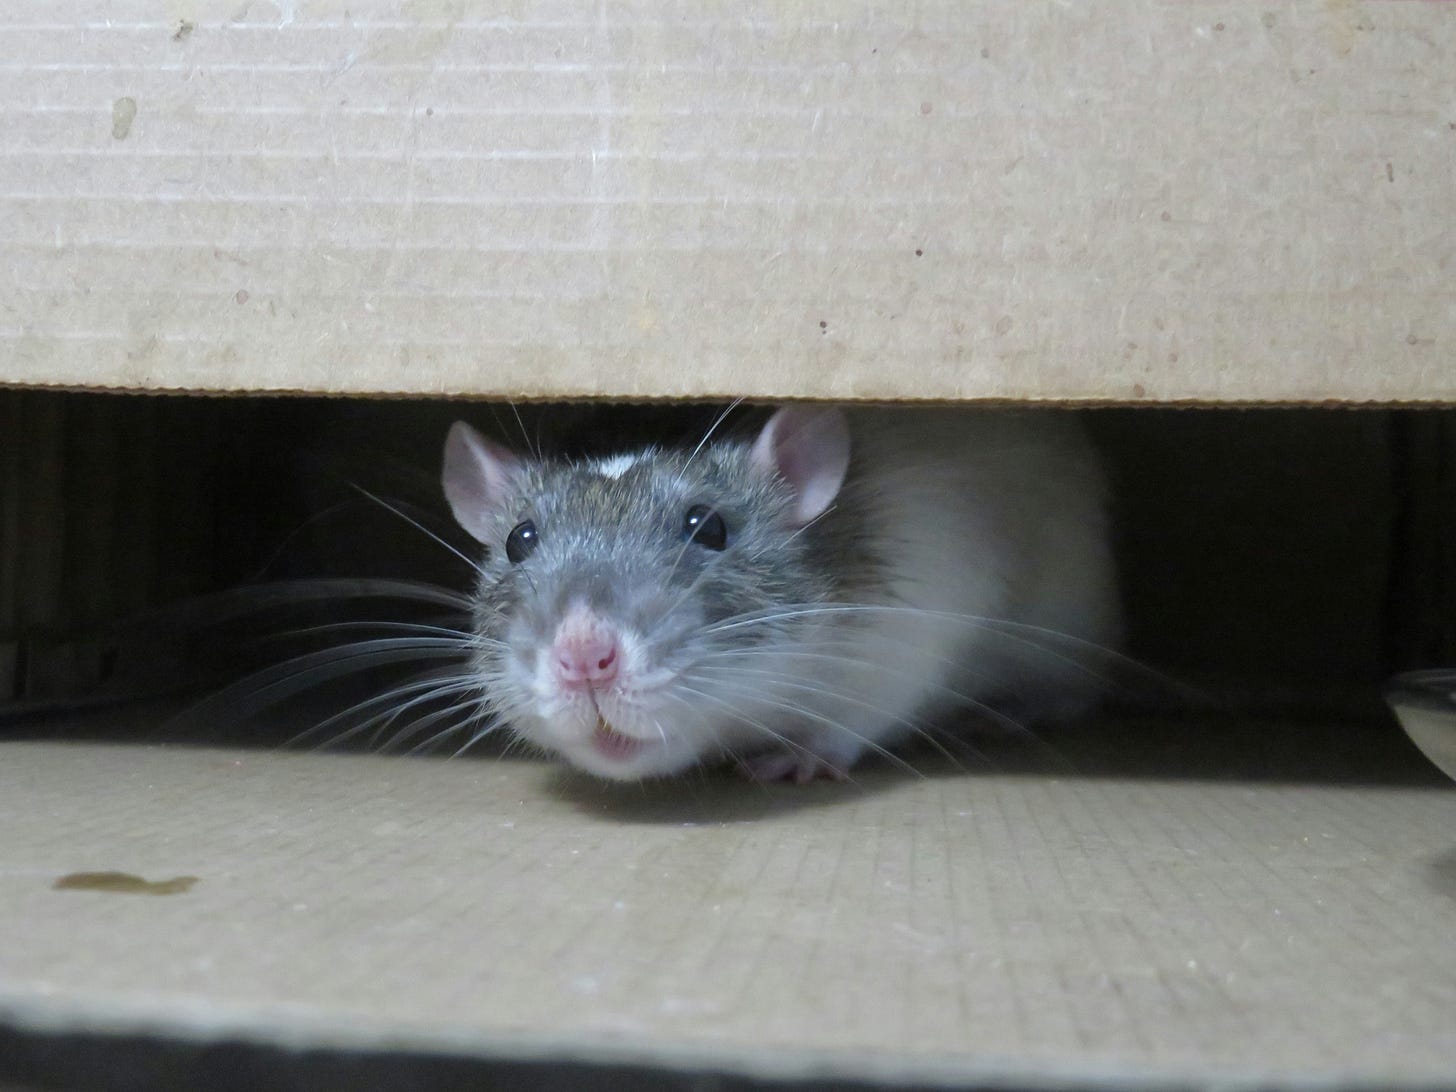 Rat hiding in a cardboard box